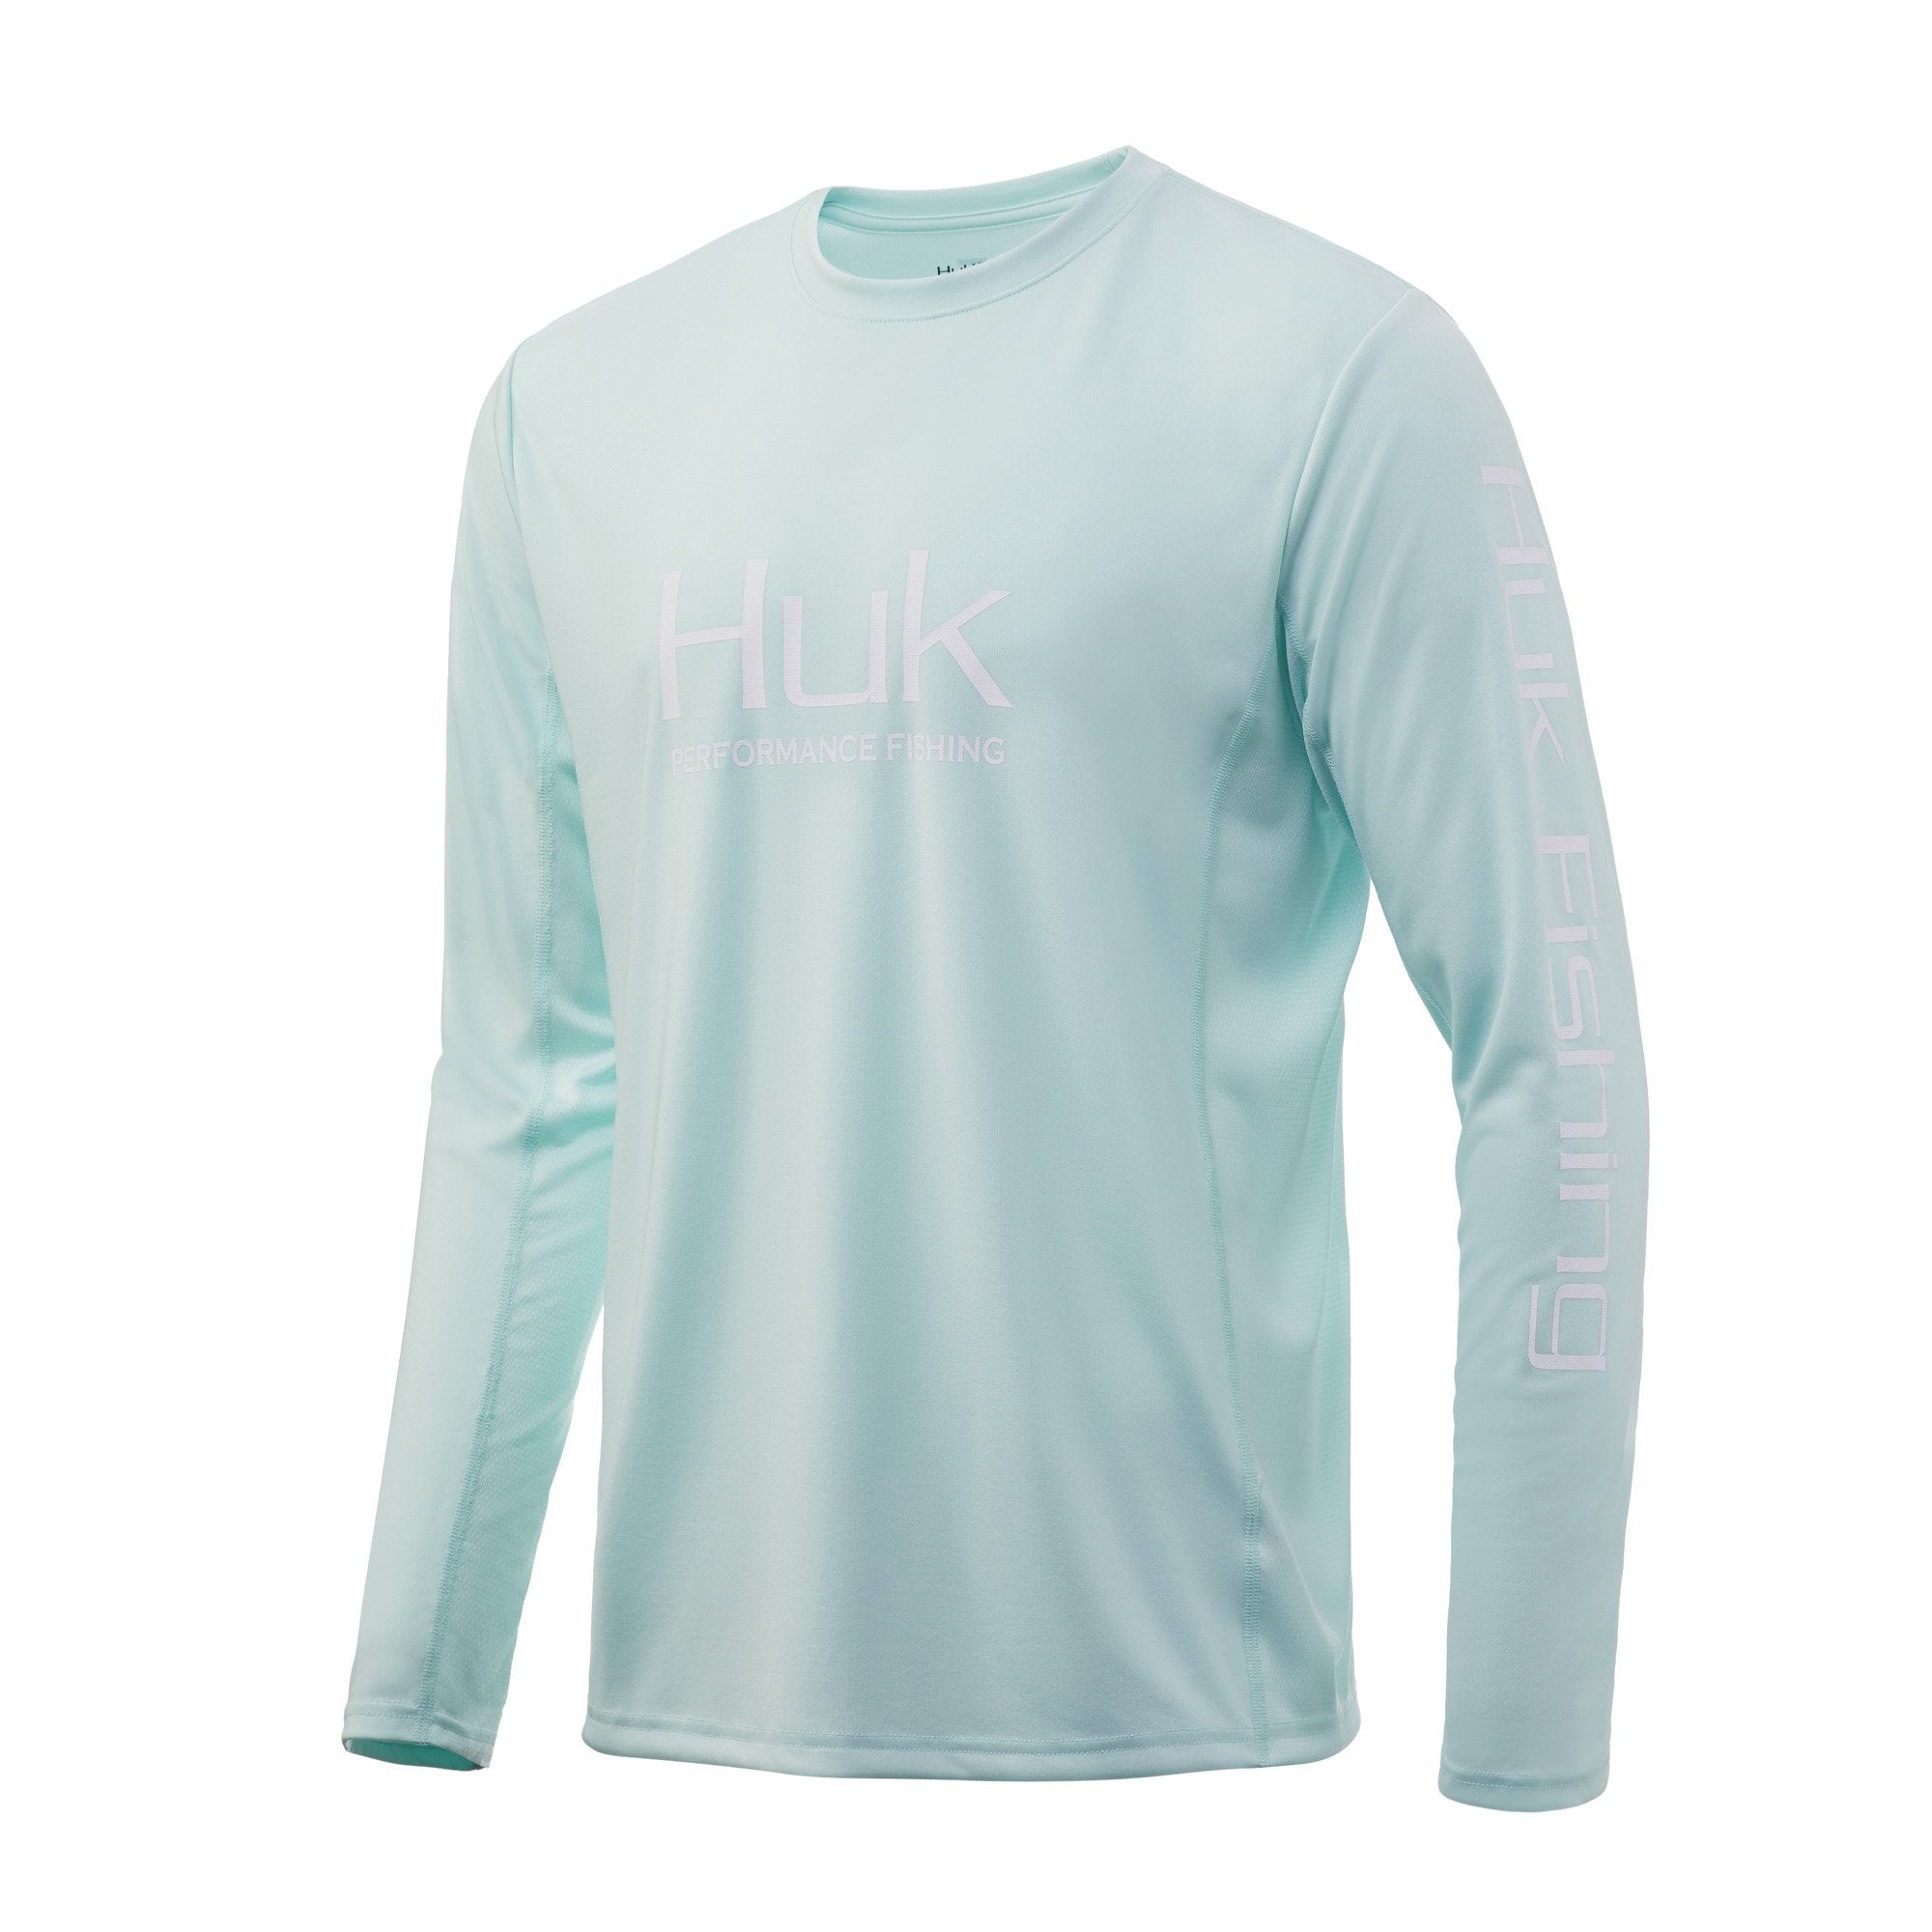 Huk Men's Icon x Long Sleeve Shirt - Carolina Blue - Small